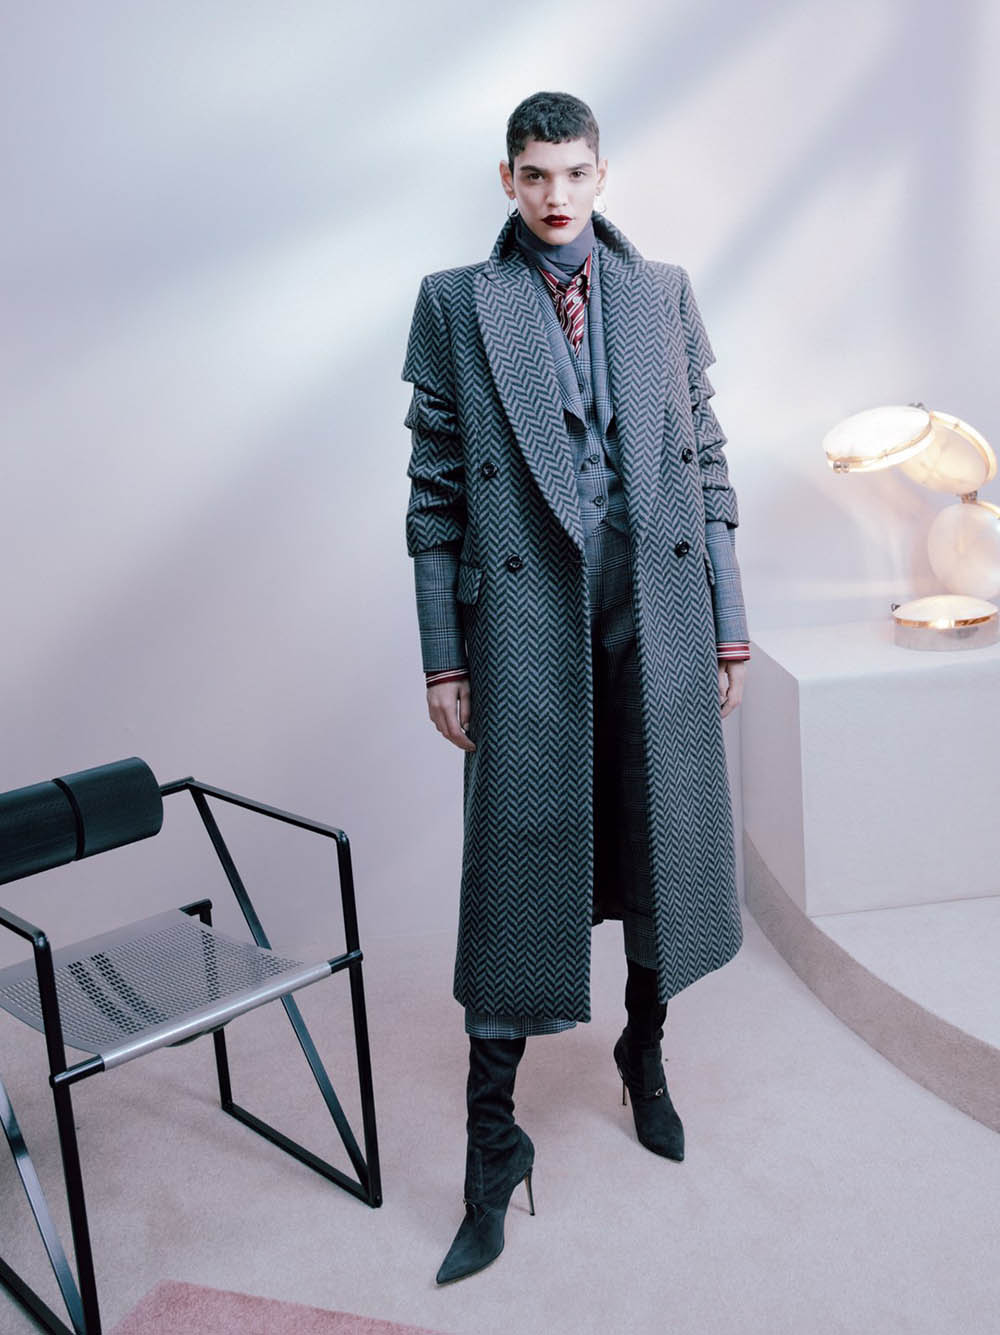 ''Fade To Grey'' by Kristin-Lee Moolman for British Vogue November 2019